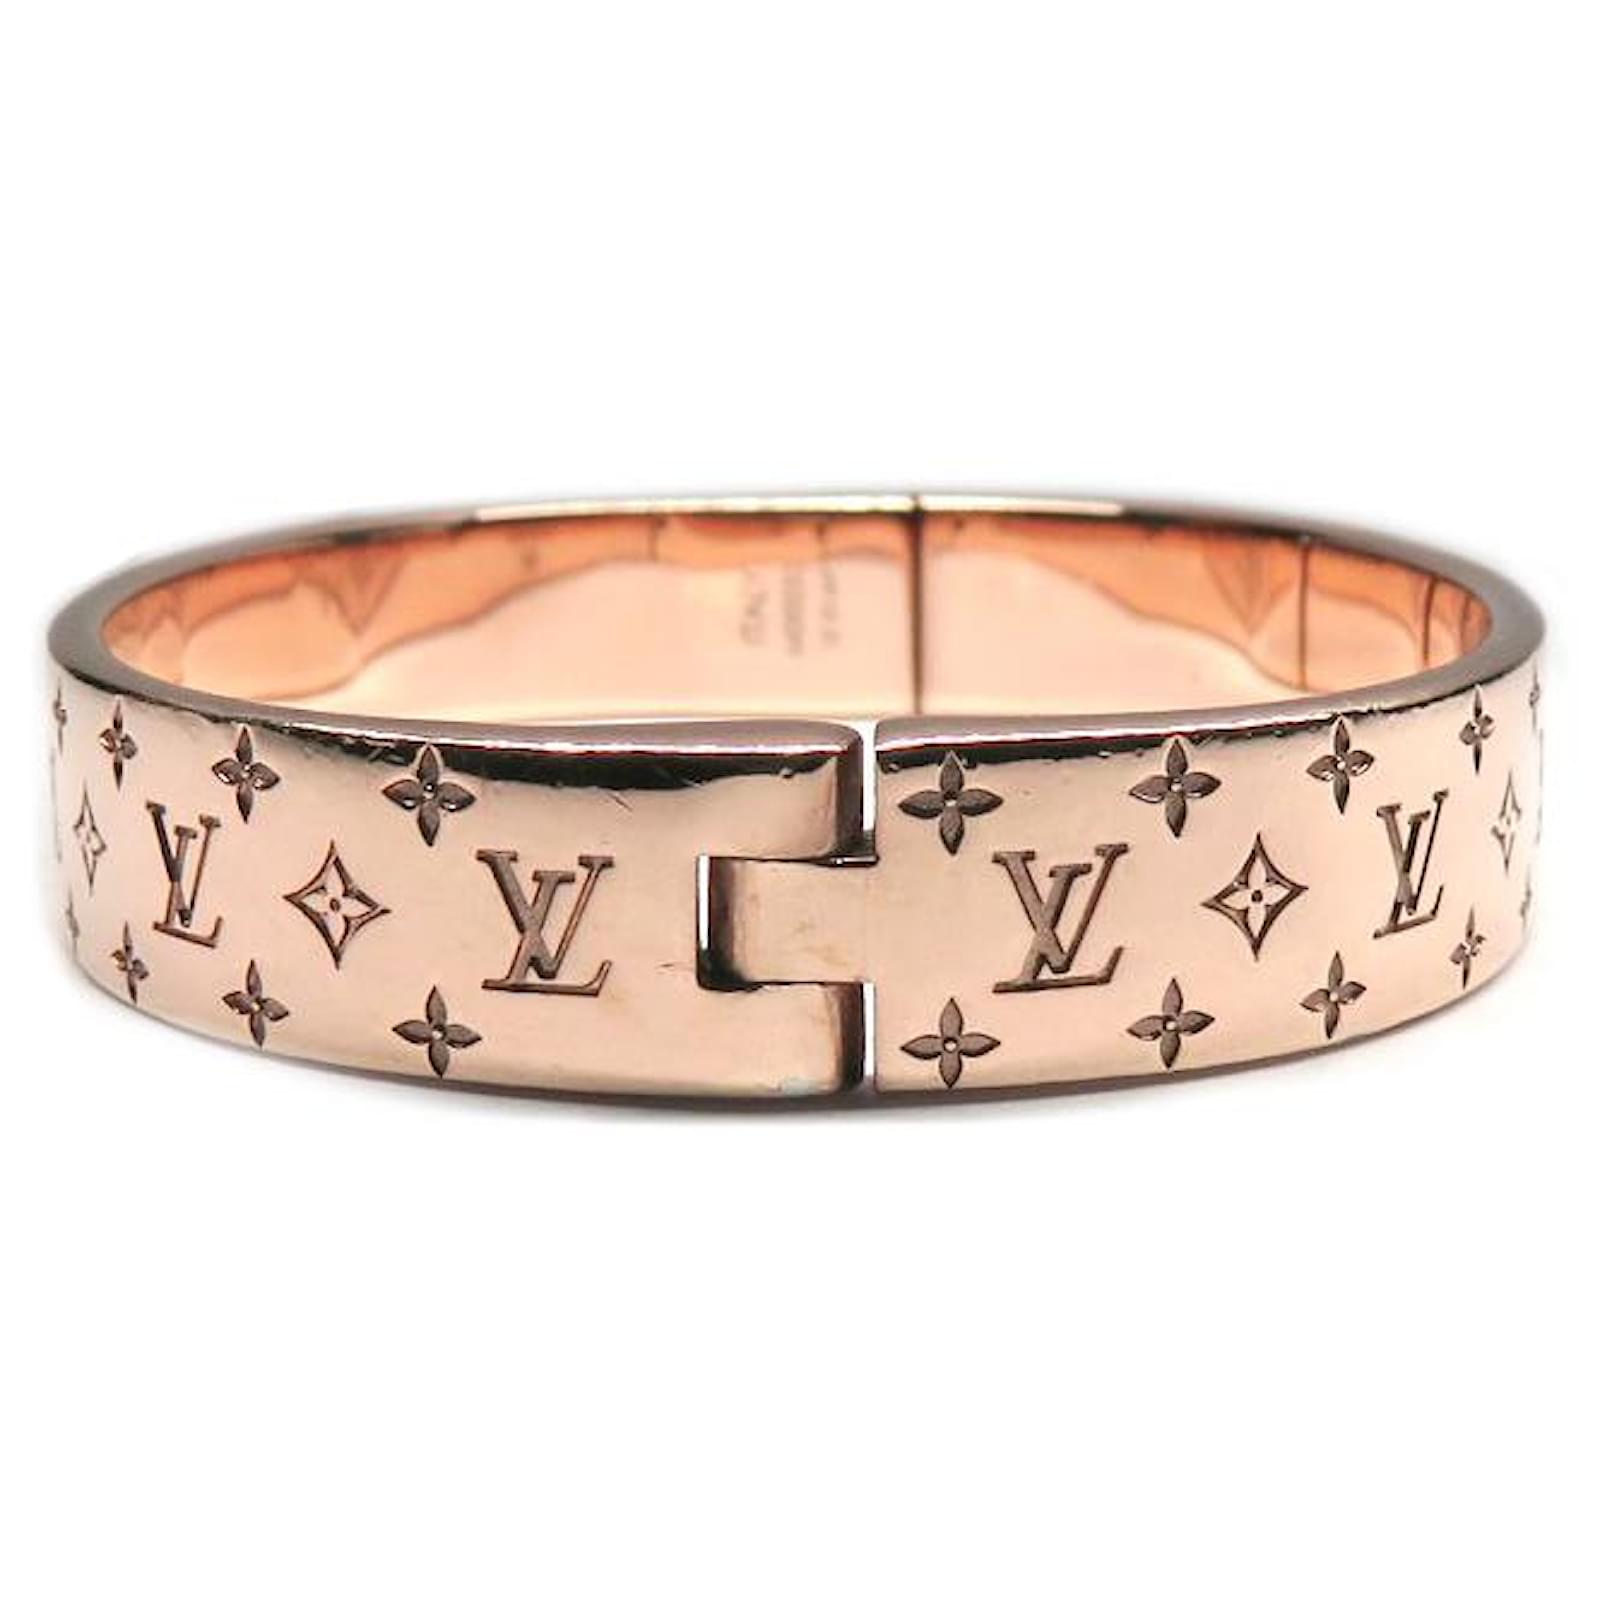 Louis Vuitton Cuff Nanogram Bracelet Bangle Monogram M00253 S Size